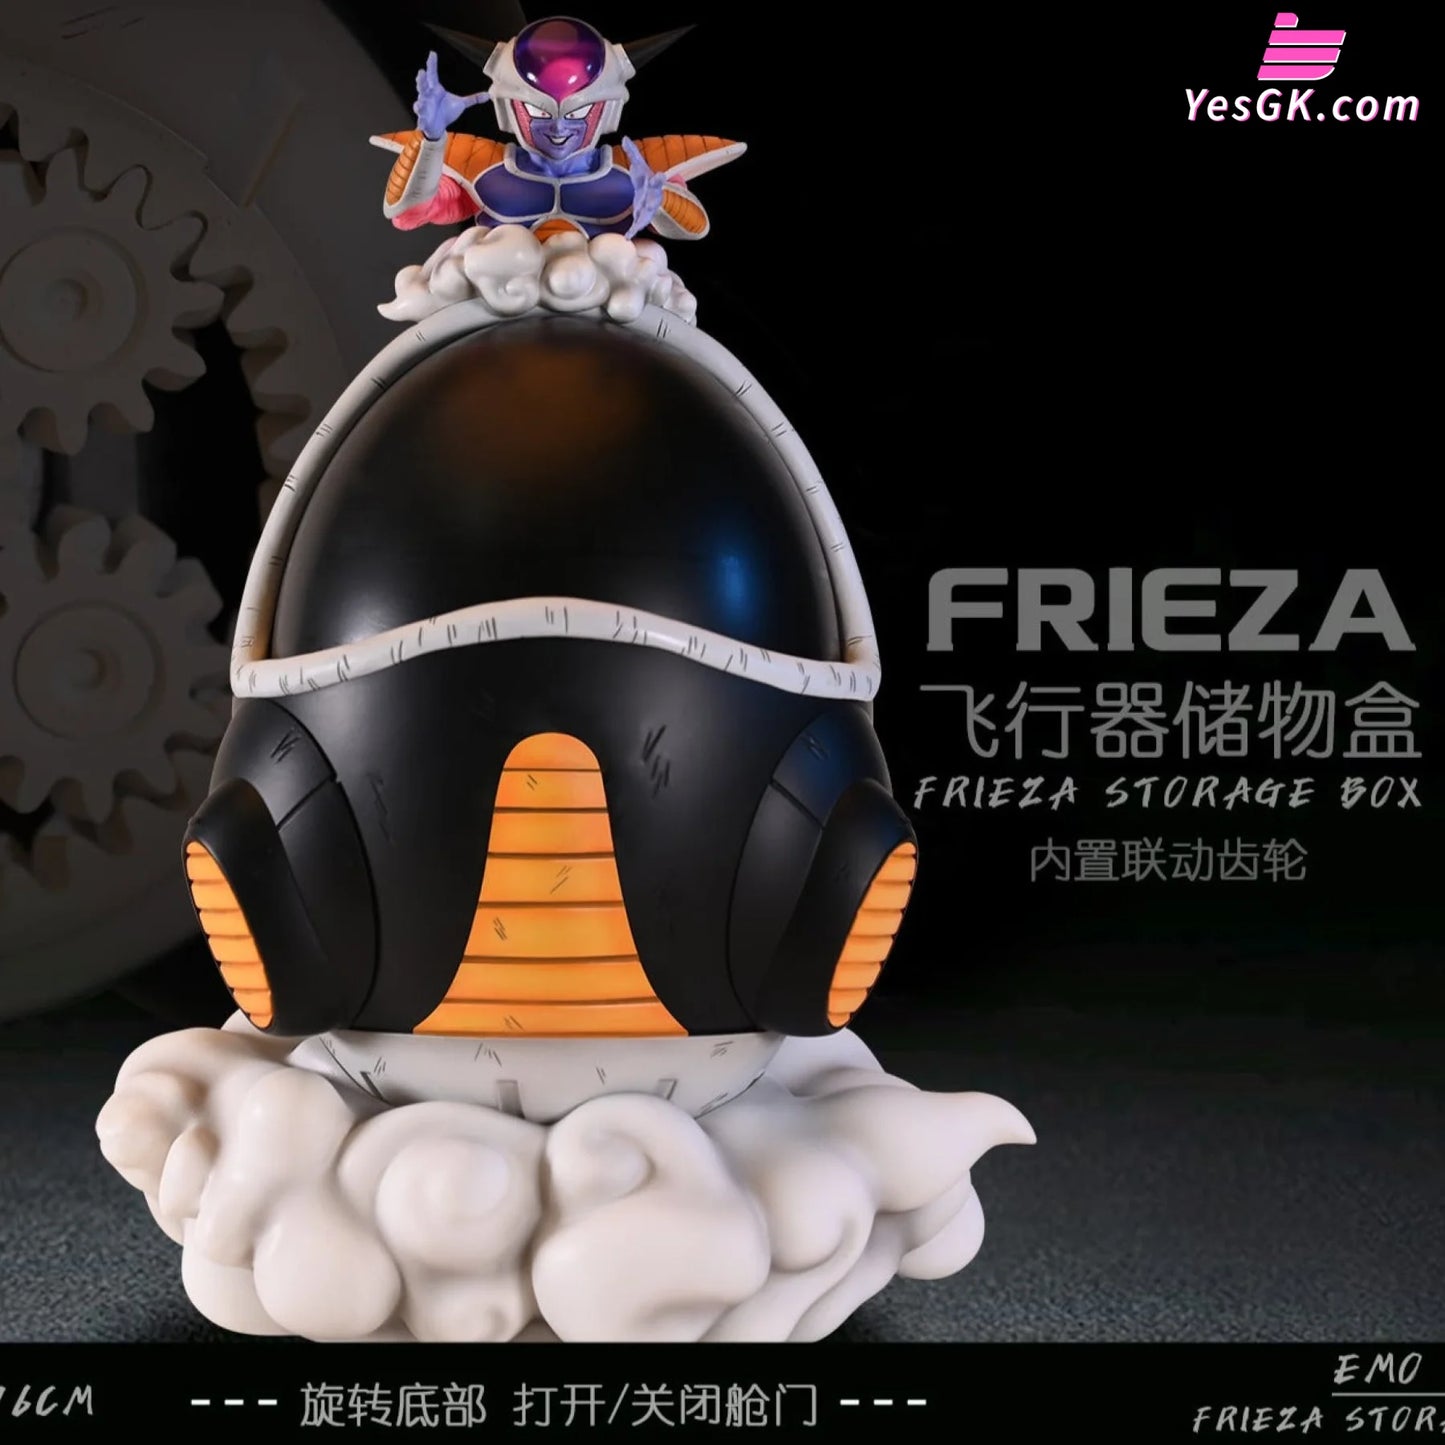 Dragon Ball Frieza Aircraft Storage Box Resin Statue - Emo Studio [In-Stock]